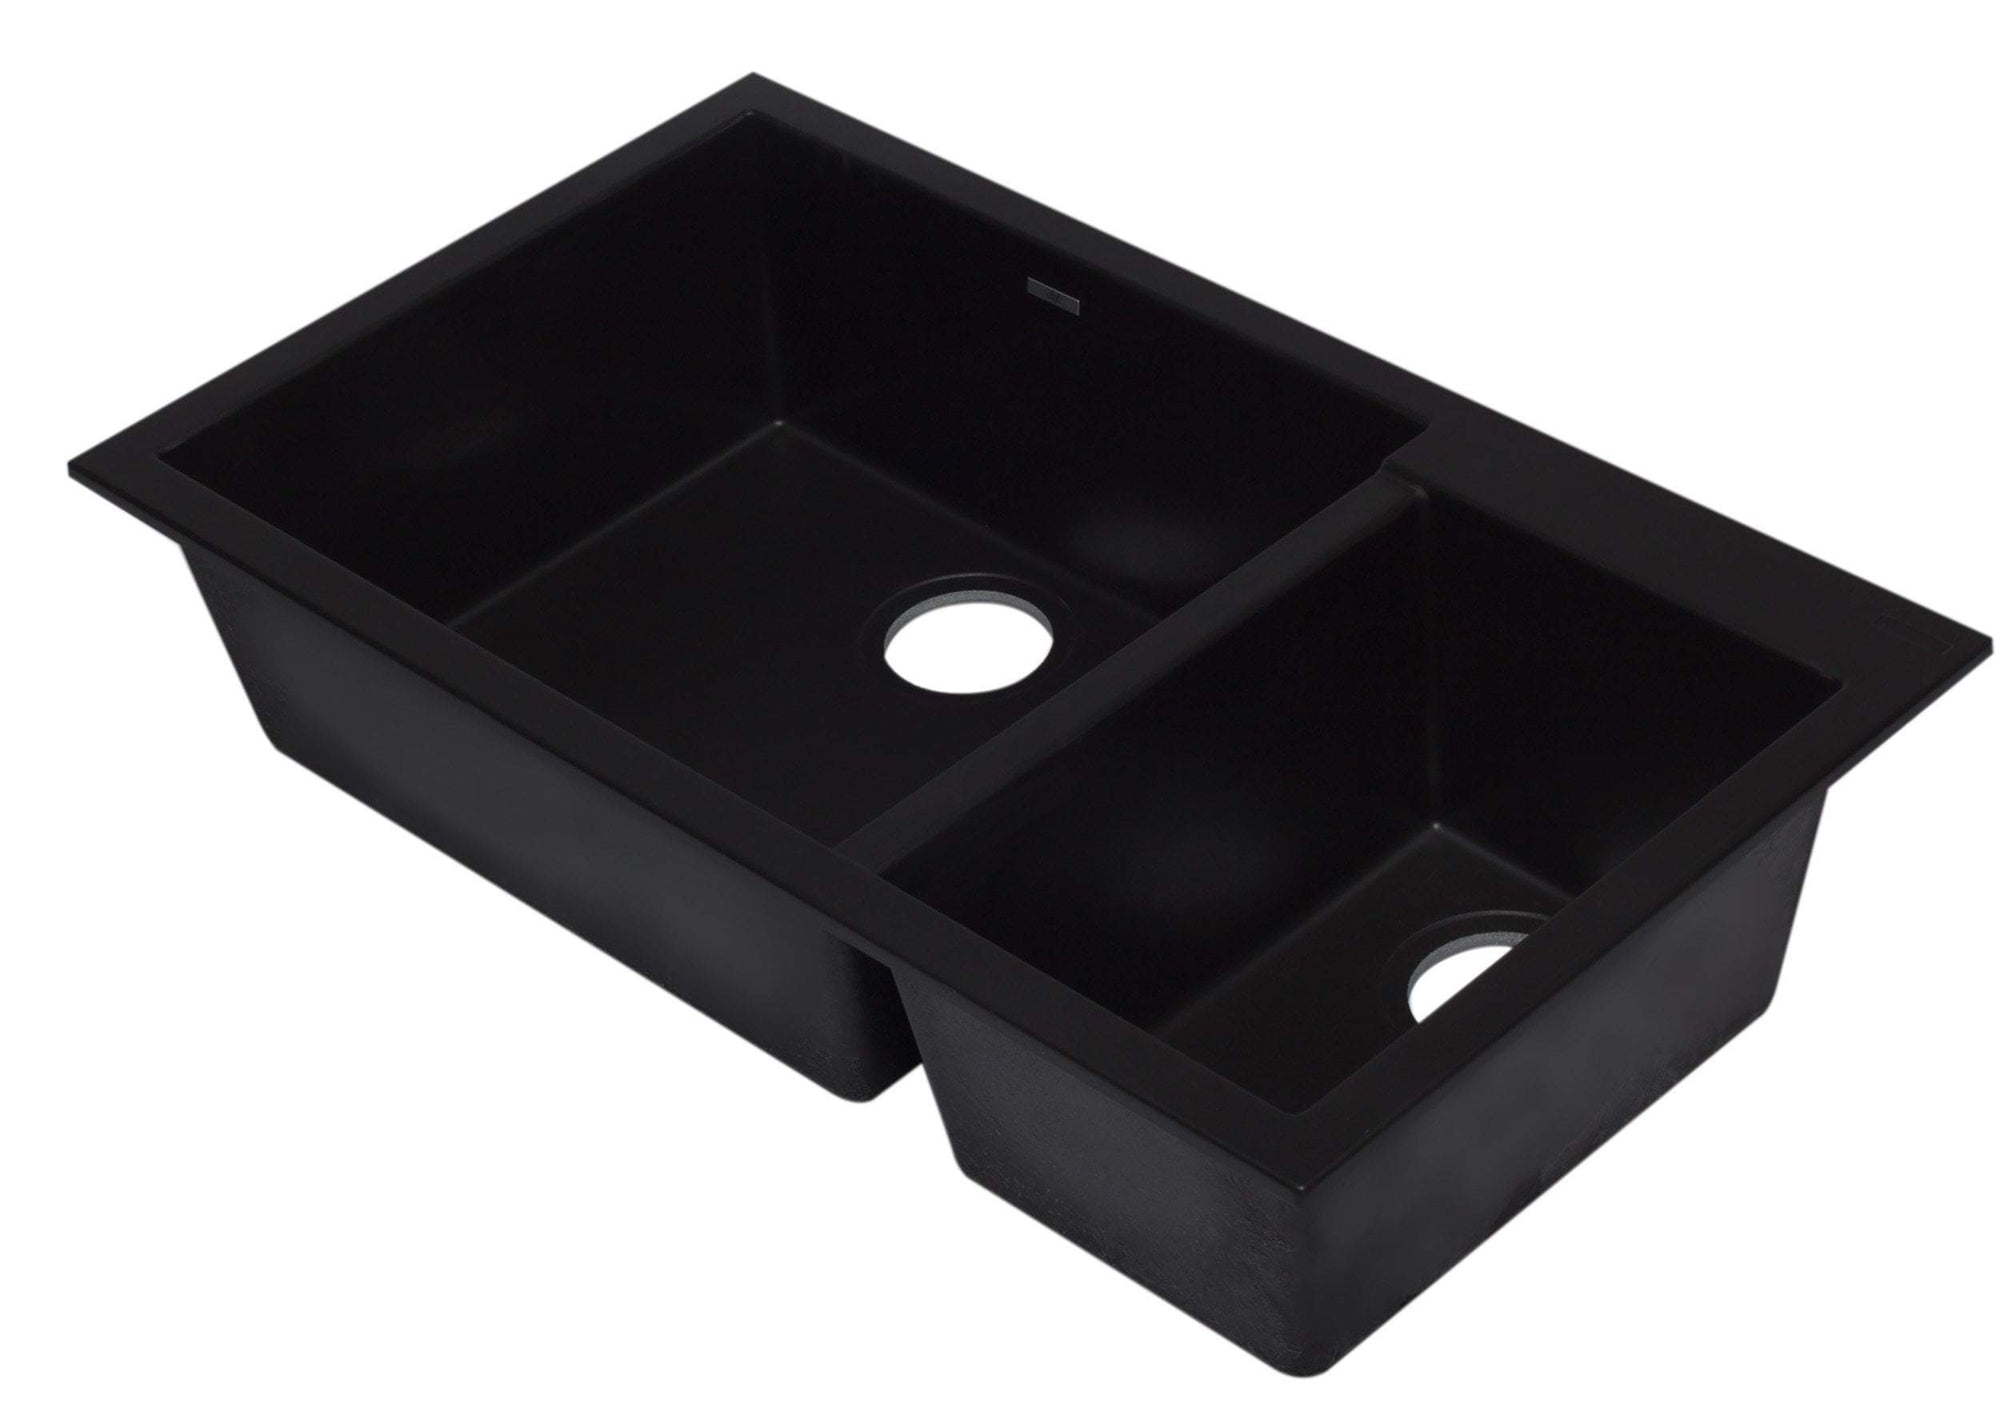 ALFI brand AB3319UM-BLA Black 34" Double Bowl Undermount Granite Composite Kitchen Sink